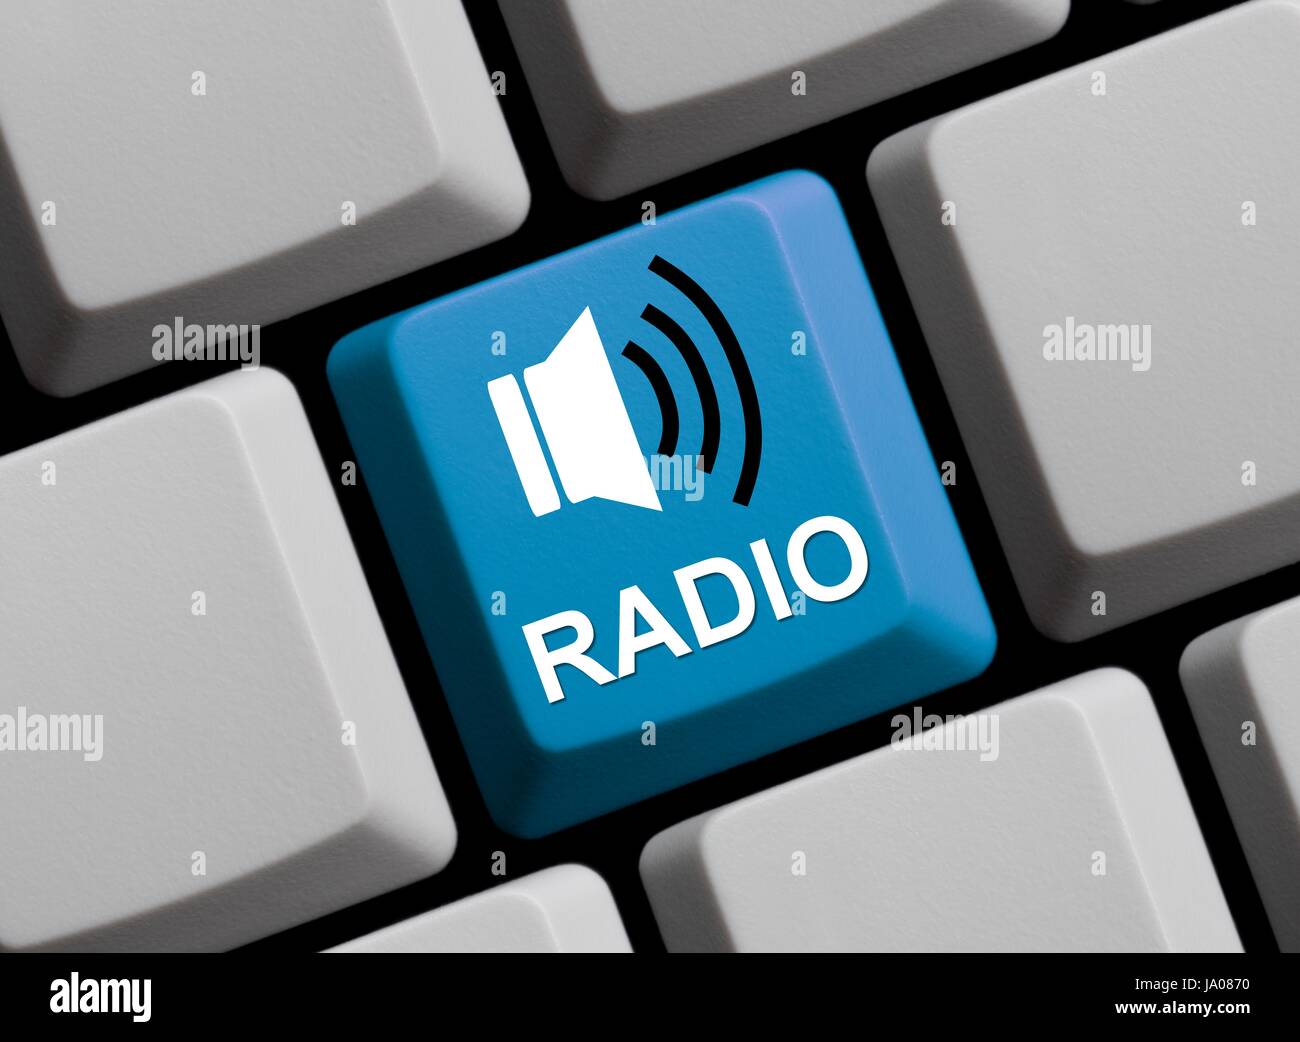 Musik hören, Radio, Rundfunk-Sender, online, Musik, hören, Grafik  Stockfotografie - Alamy